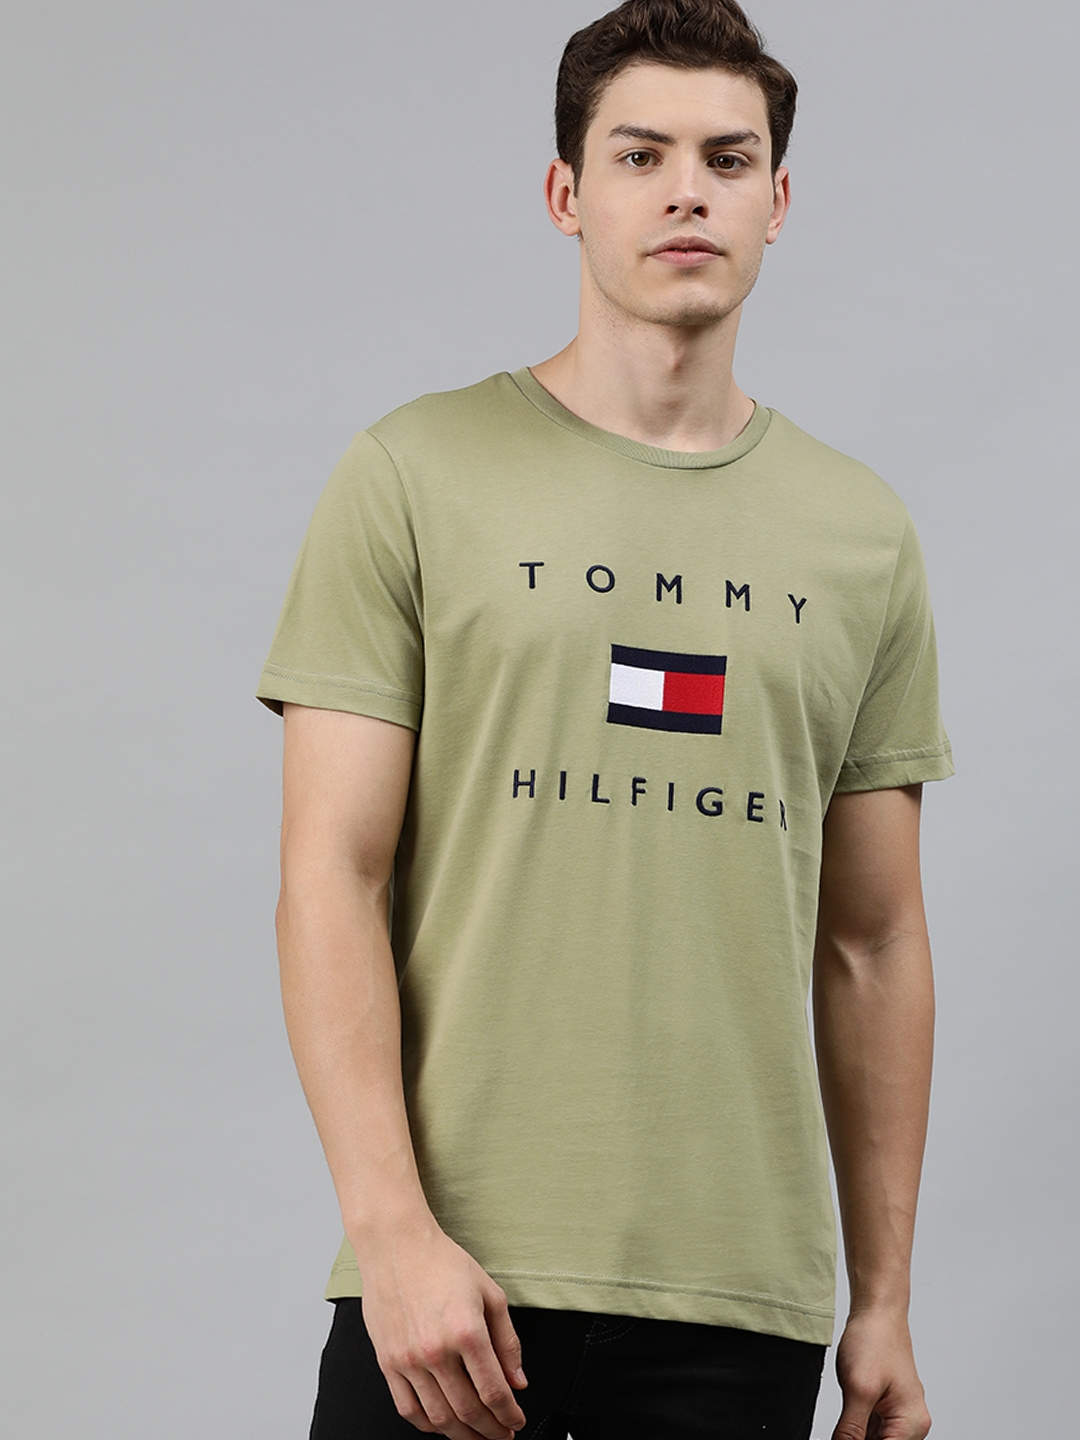 Buy Tommy Hilfiger Men Olive Green Printed Round Neck T Shirt - Tshirts for Men 12812786 | Myntra